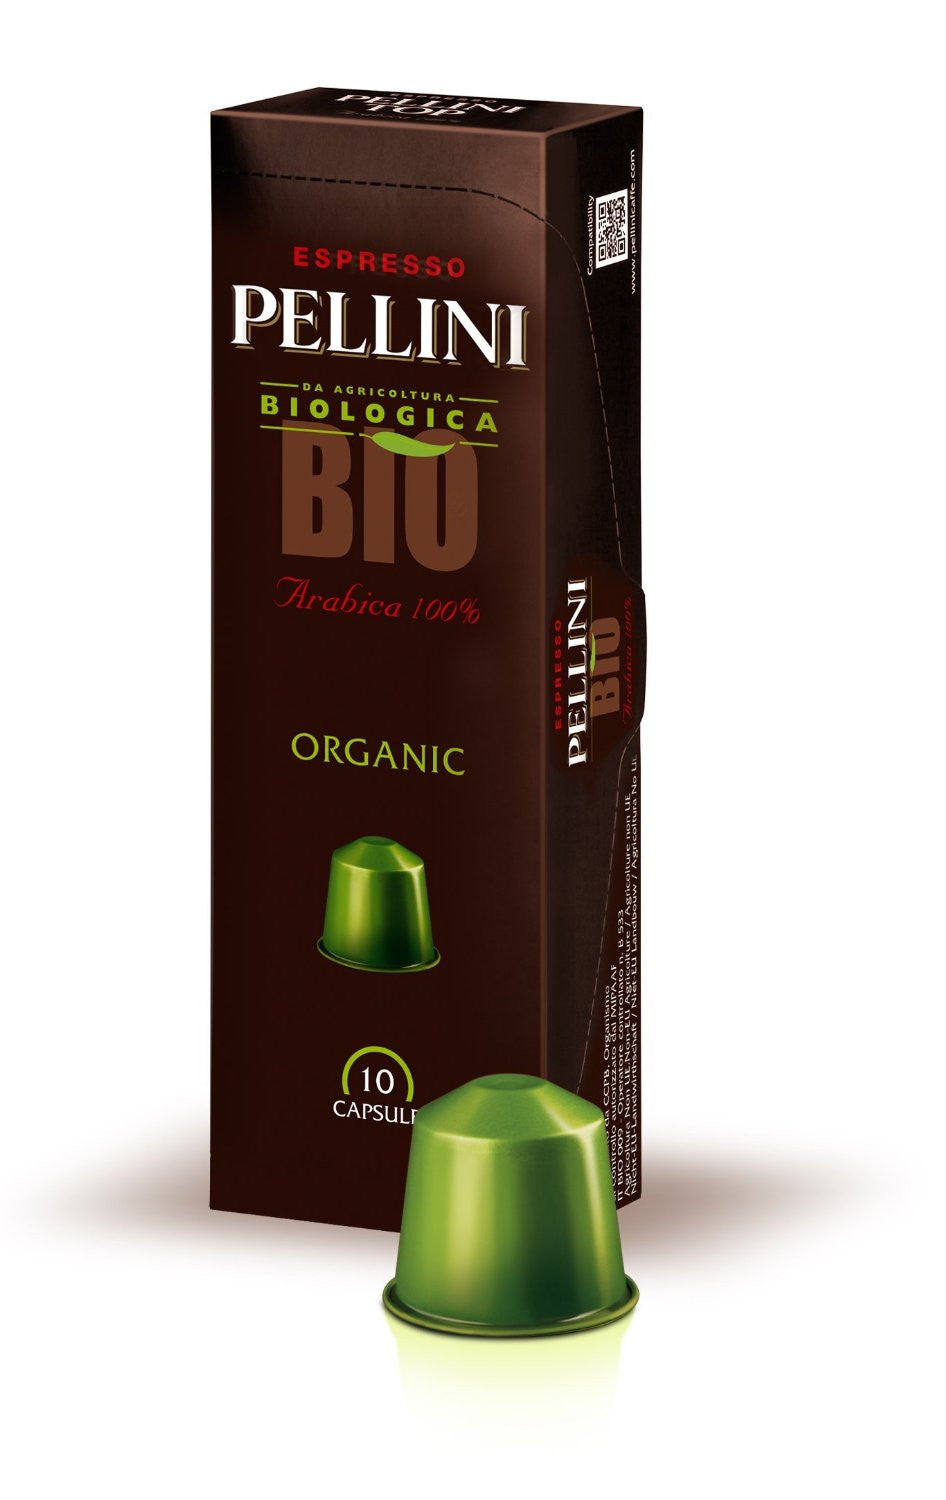 Pellini Nespresso Capsule Gift Set Pasta And Vino